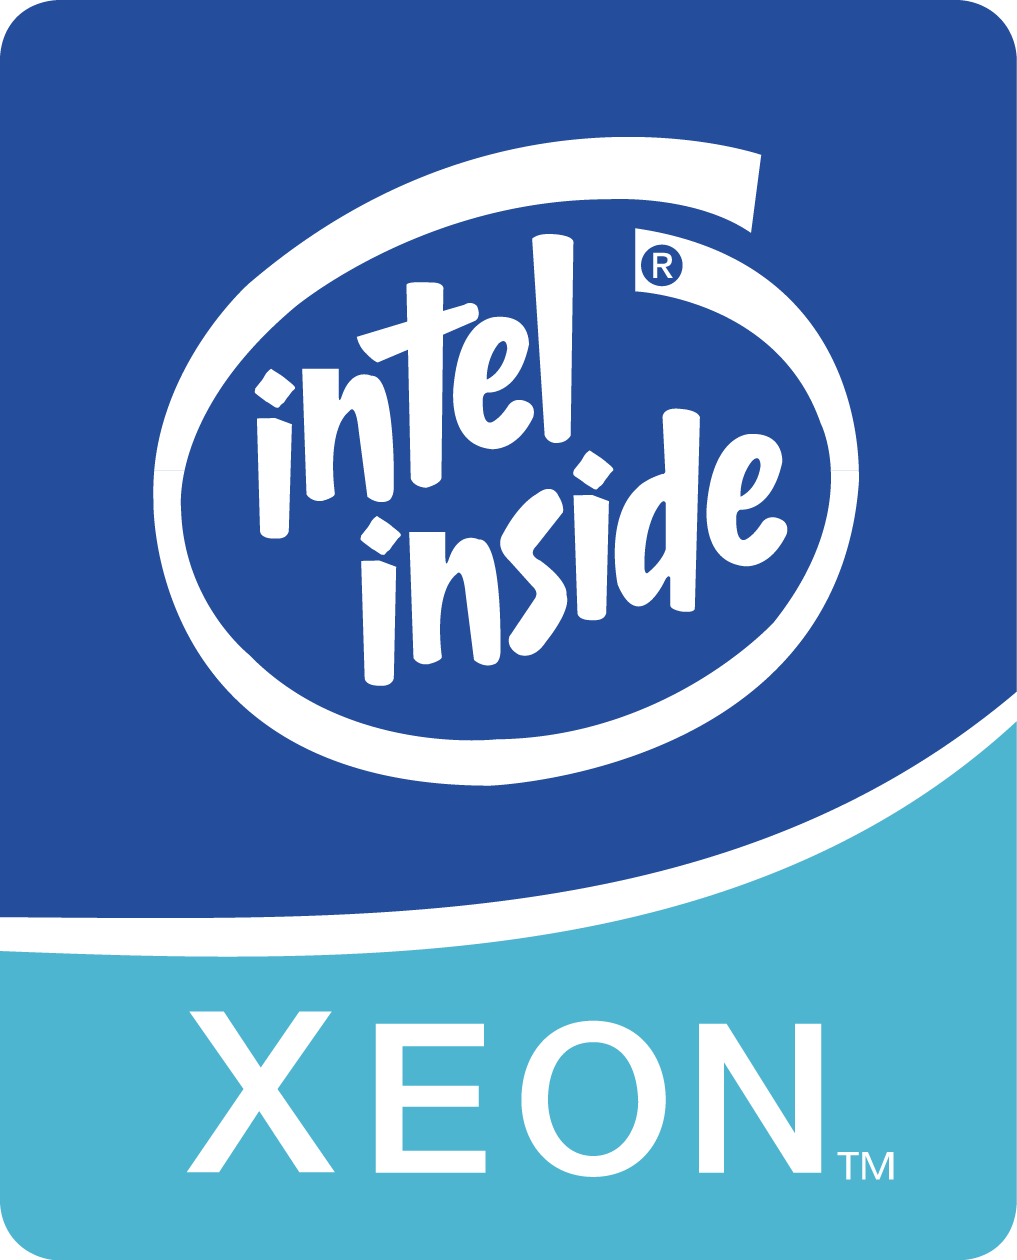 Xeon Logo [Intel Xeon Processor]